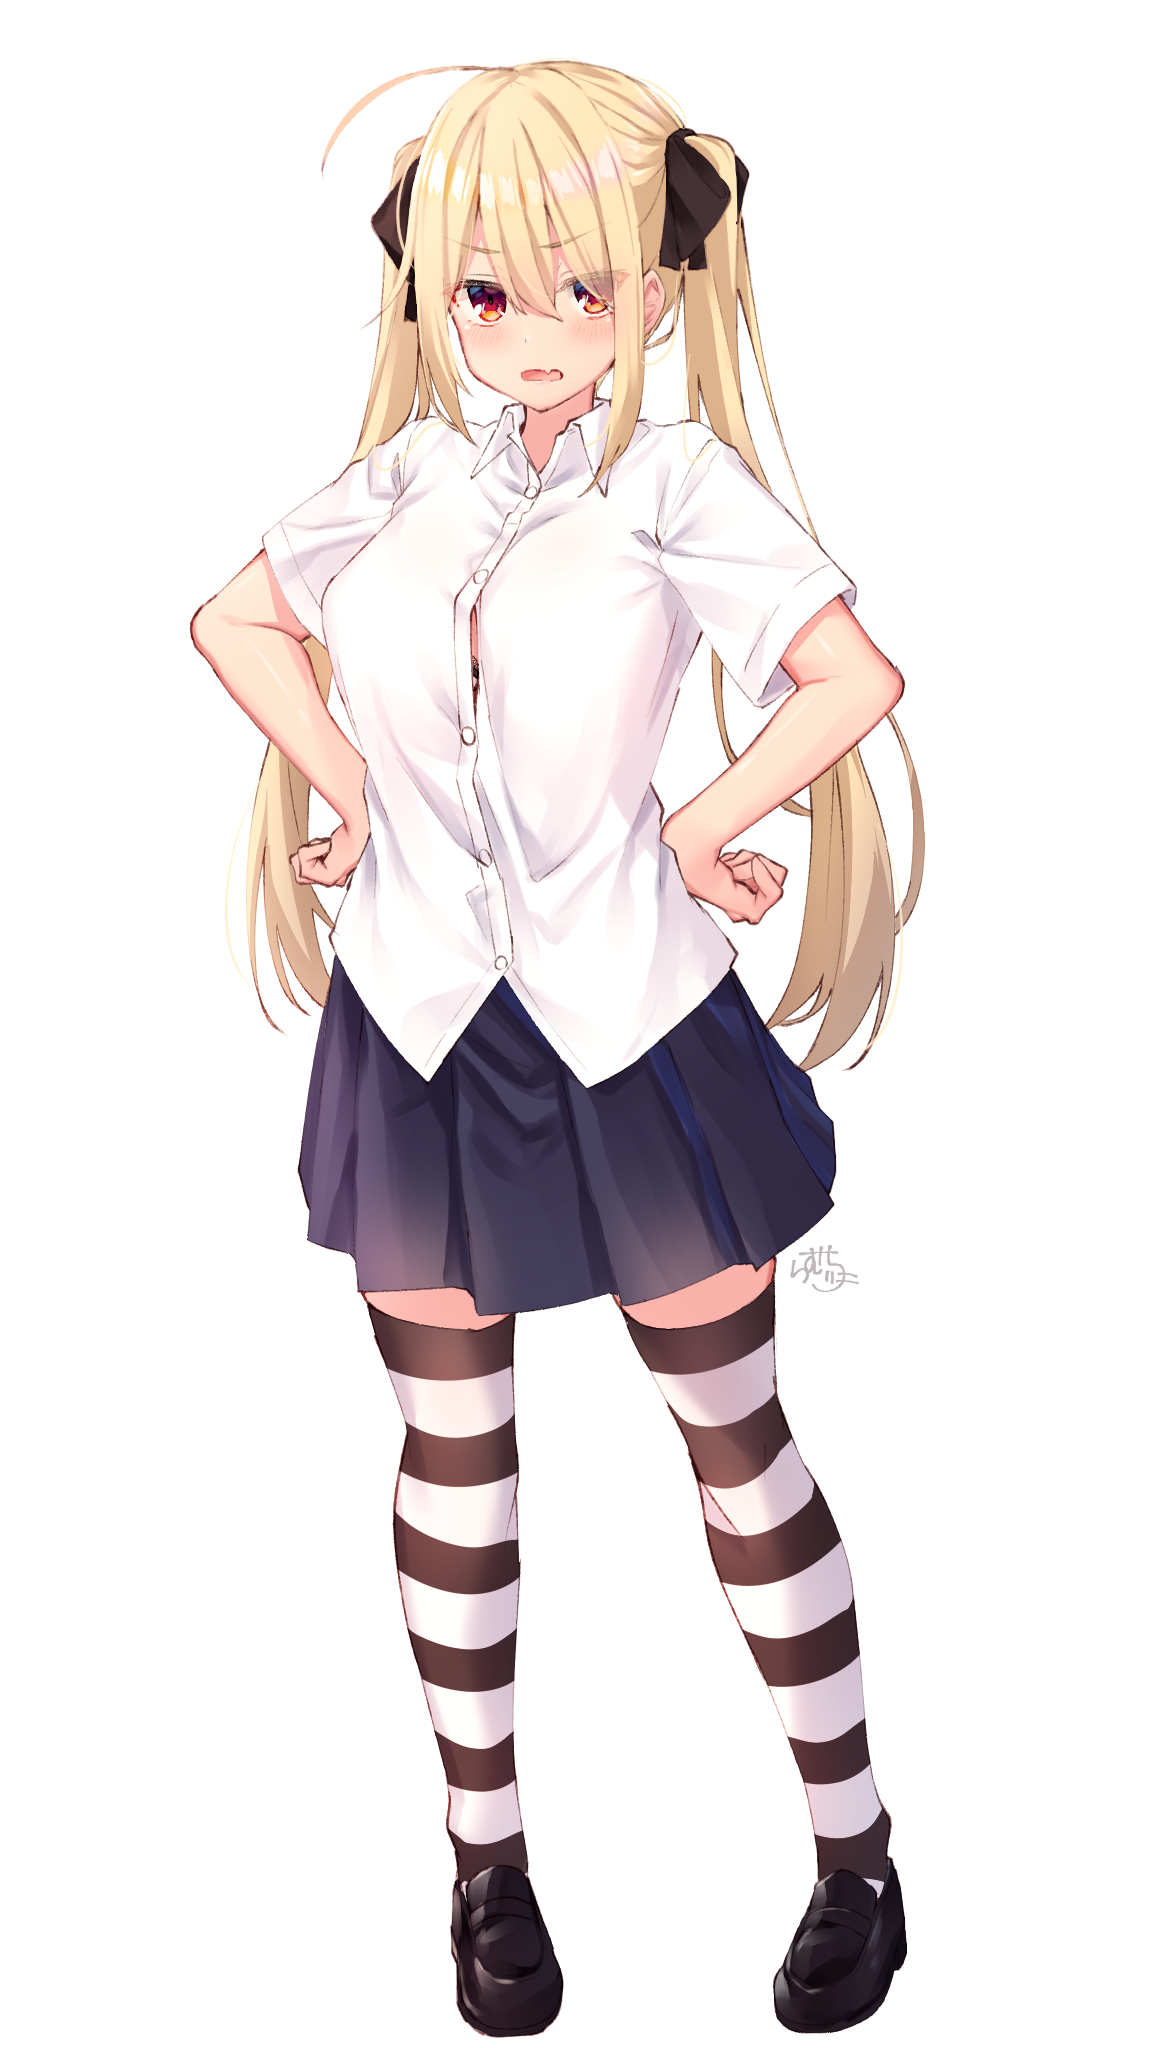 Anime 1152x2048 anime anime girls digital art artwork 2D portrait display RamchiPixiv skirt thigh-highs blonde twintails brown eyes school uniform